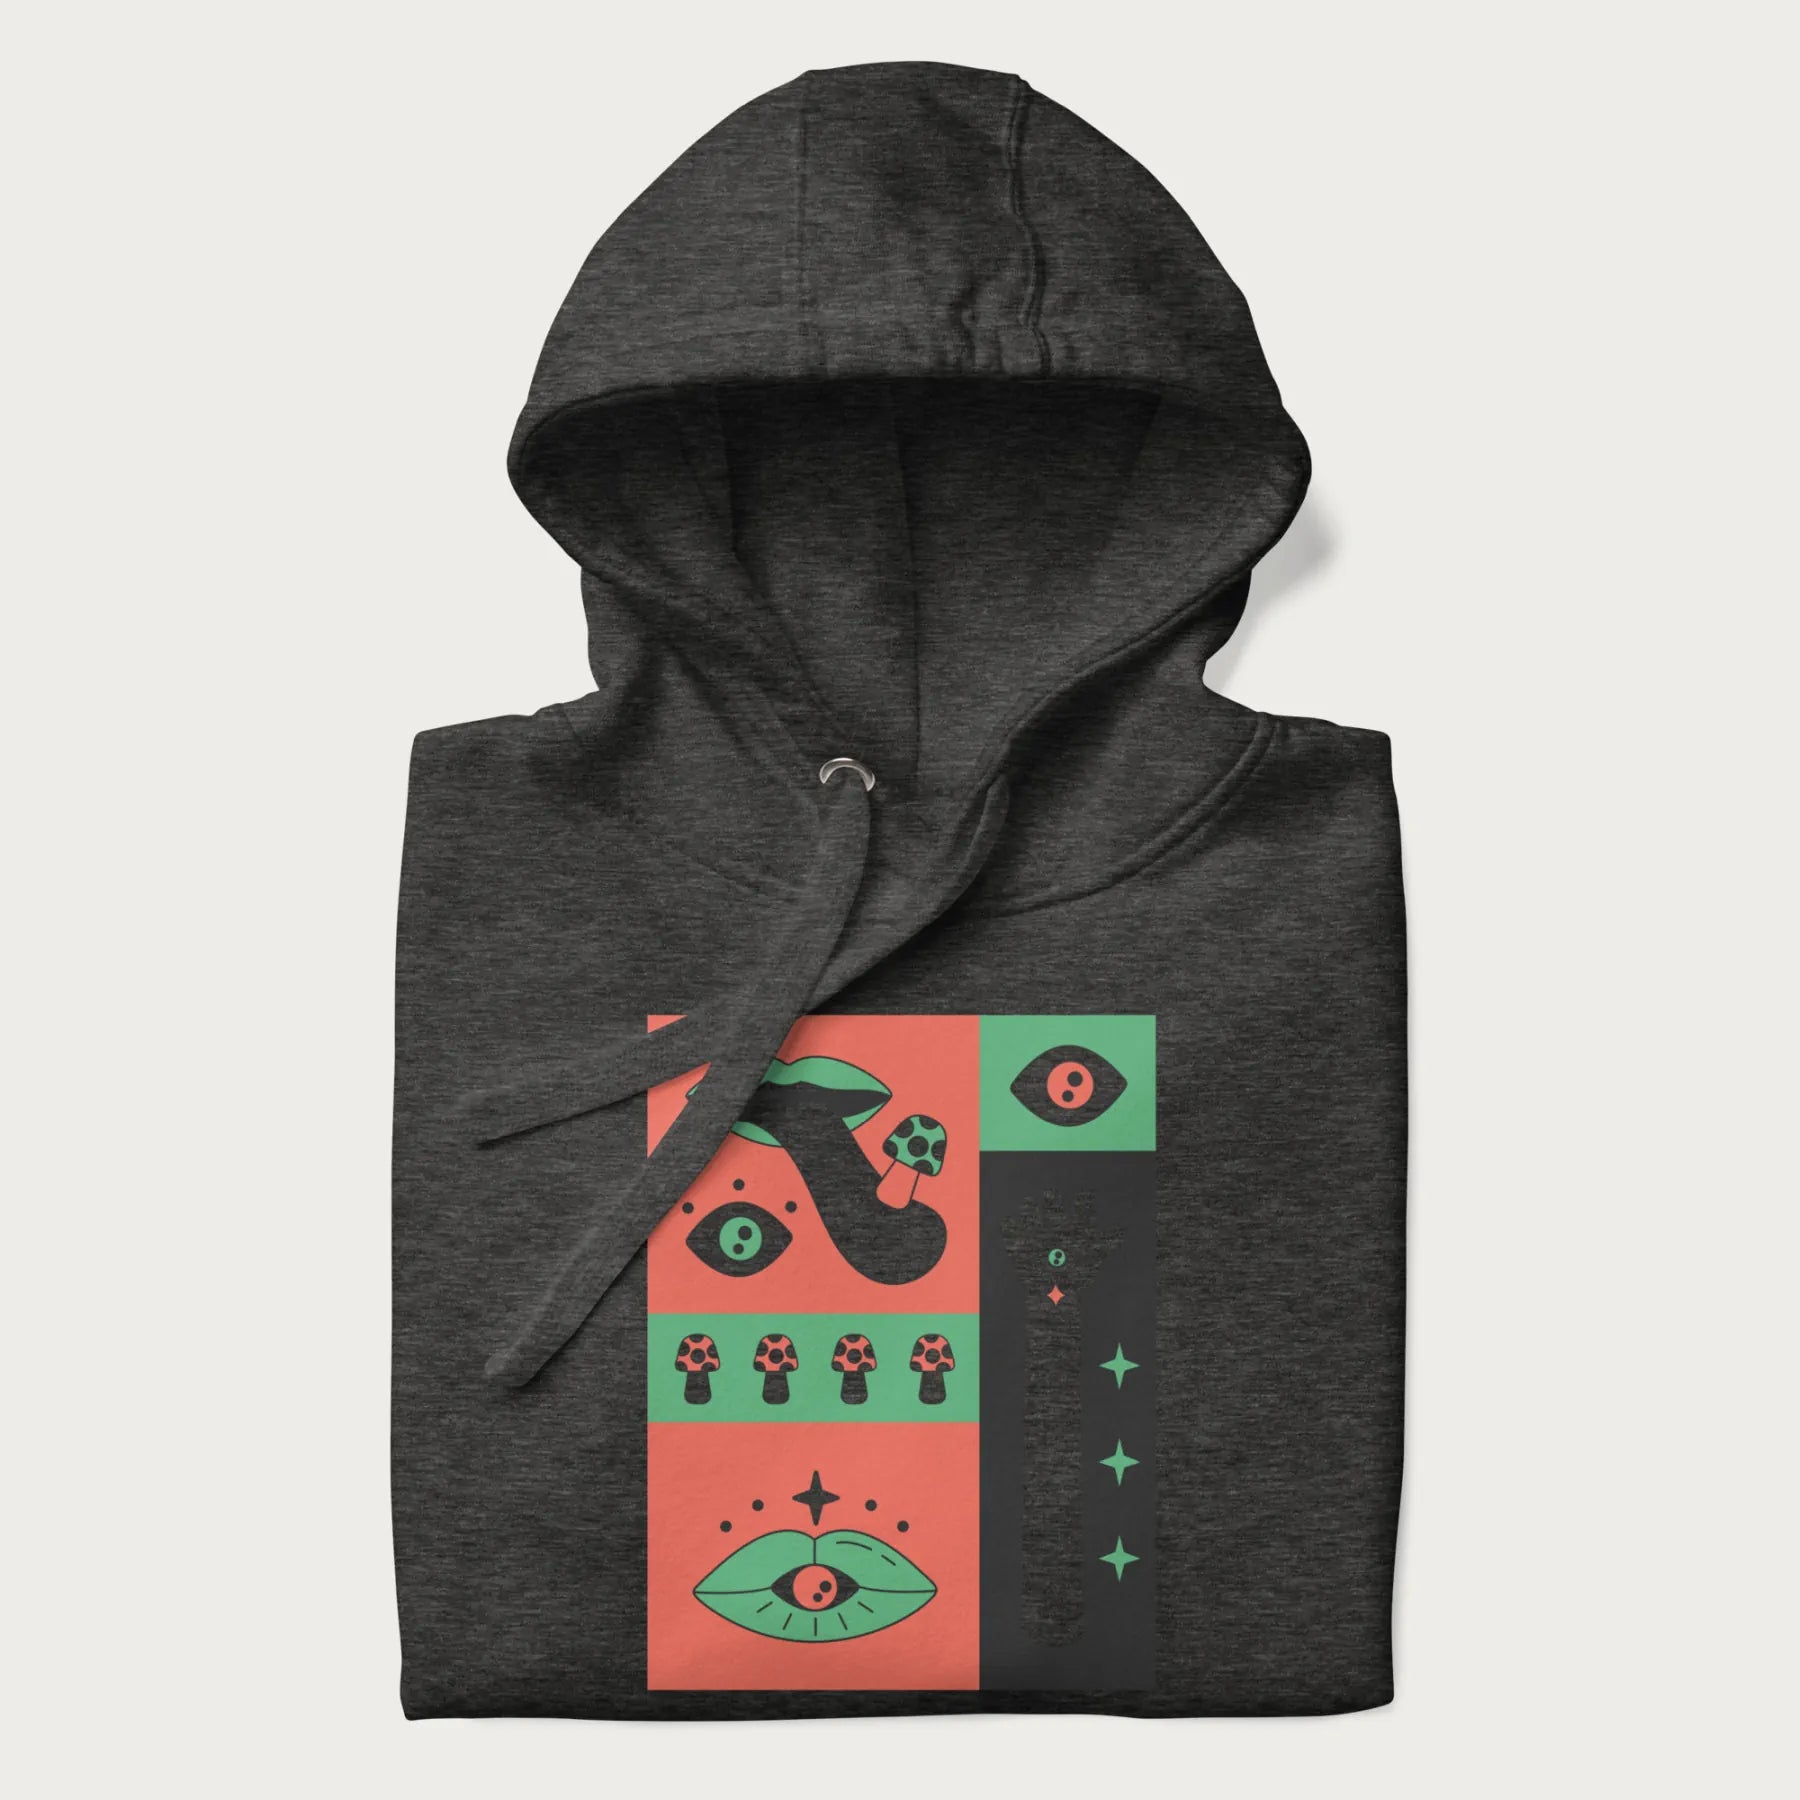 Folded dark grey hoodie with mushroom psychedelic designs of surreal elements like lips, eyes, and mushrooms.